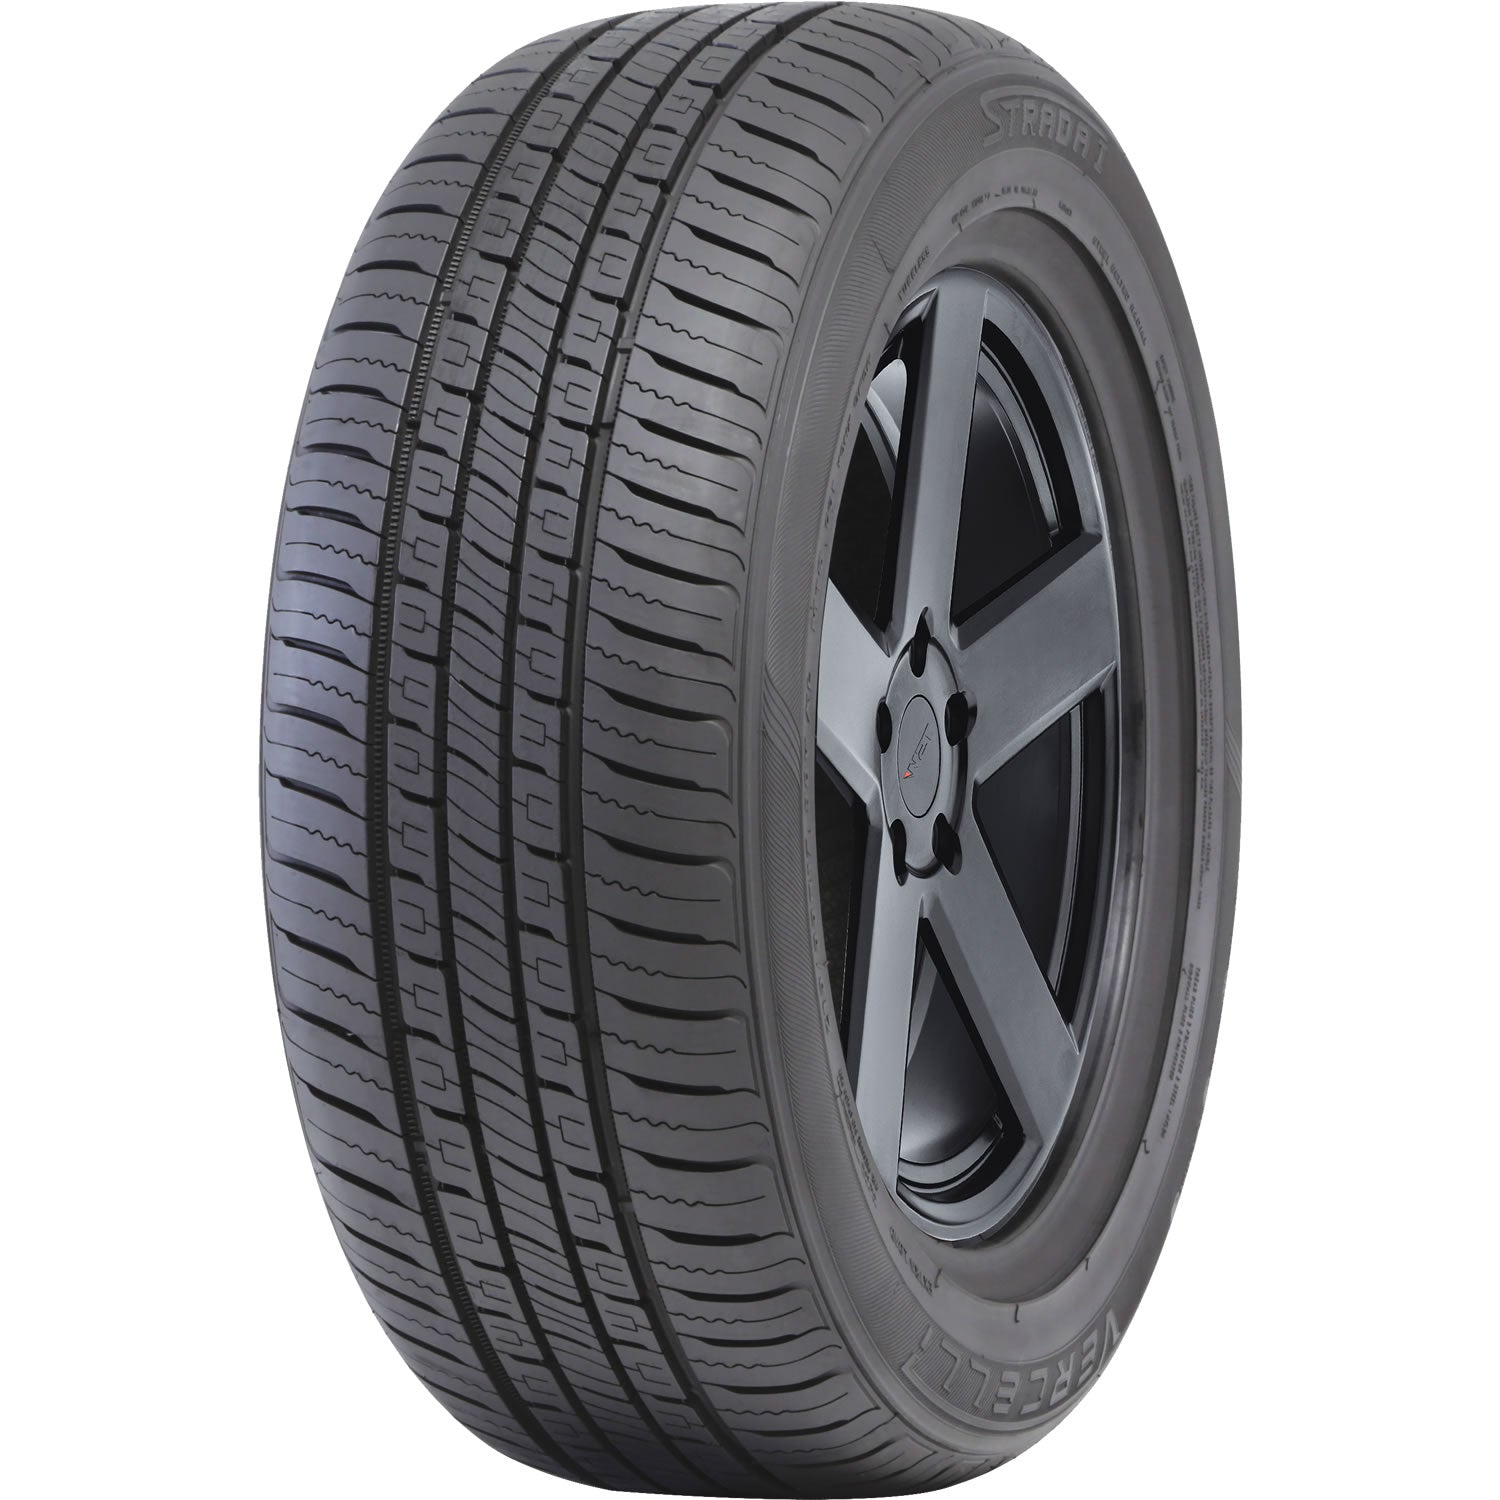 VERCELLI STRADA I 215/55R17 (26.3X8.9R 17) Tires